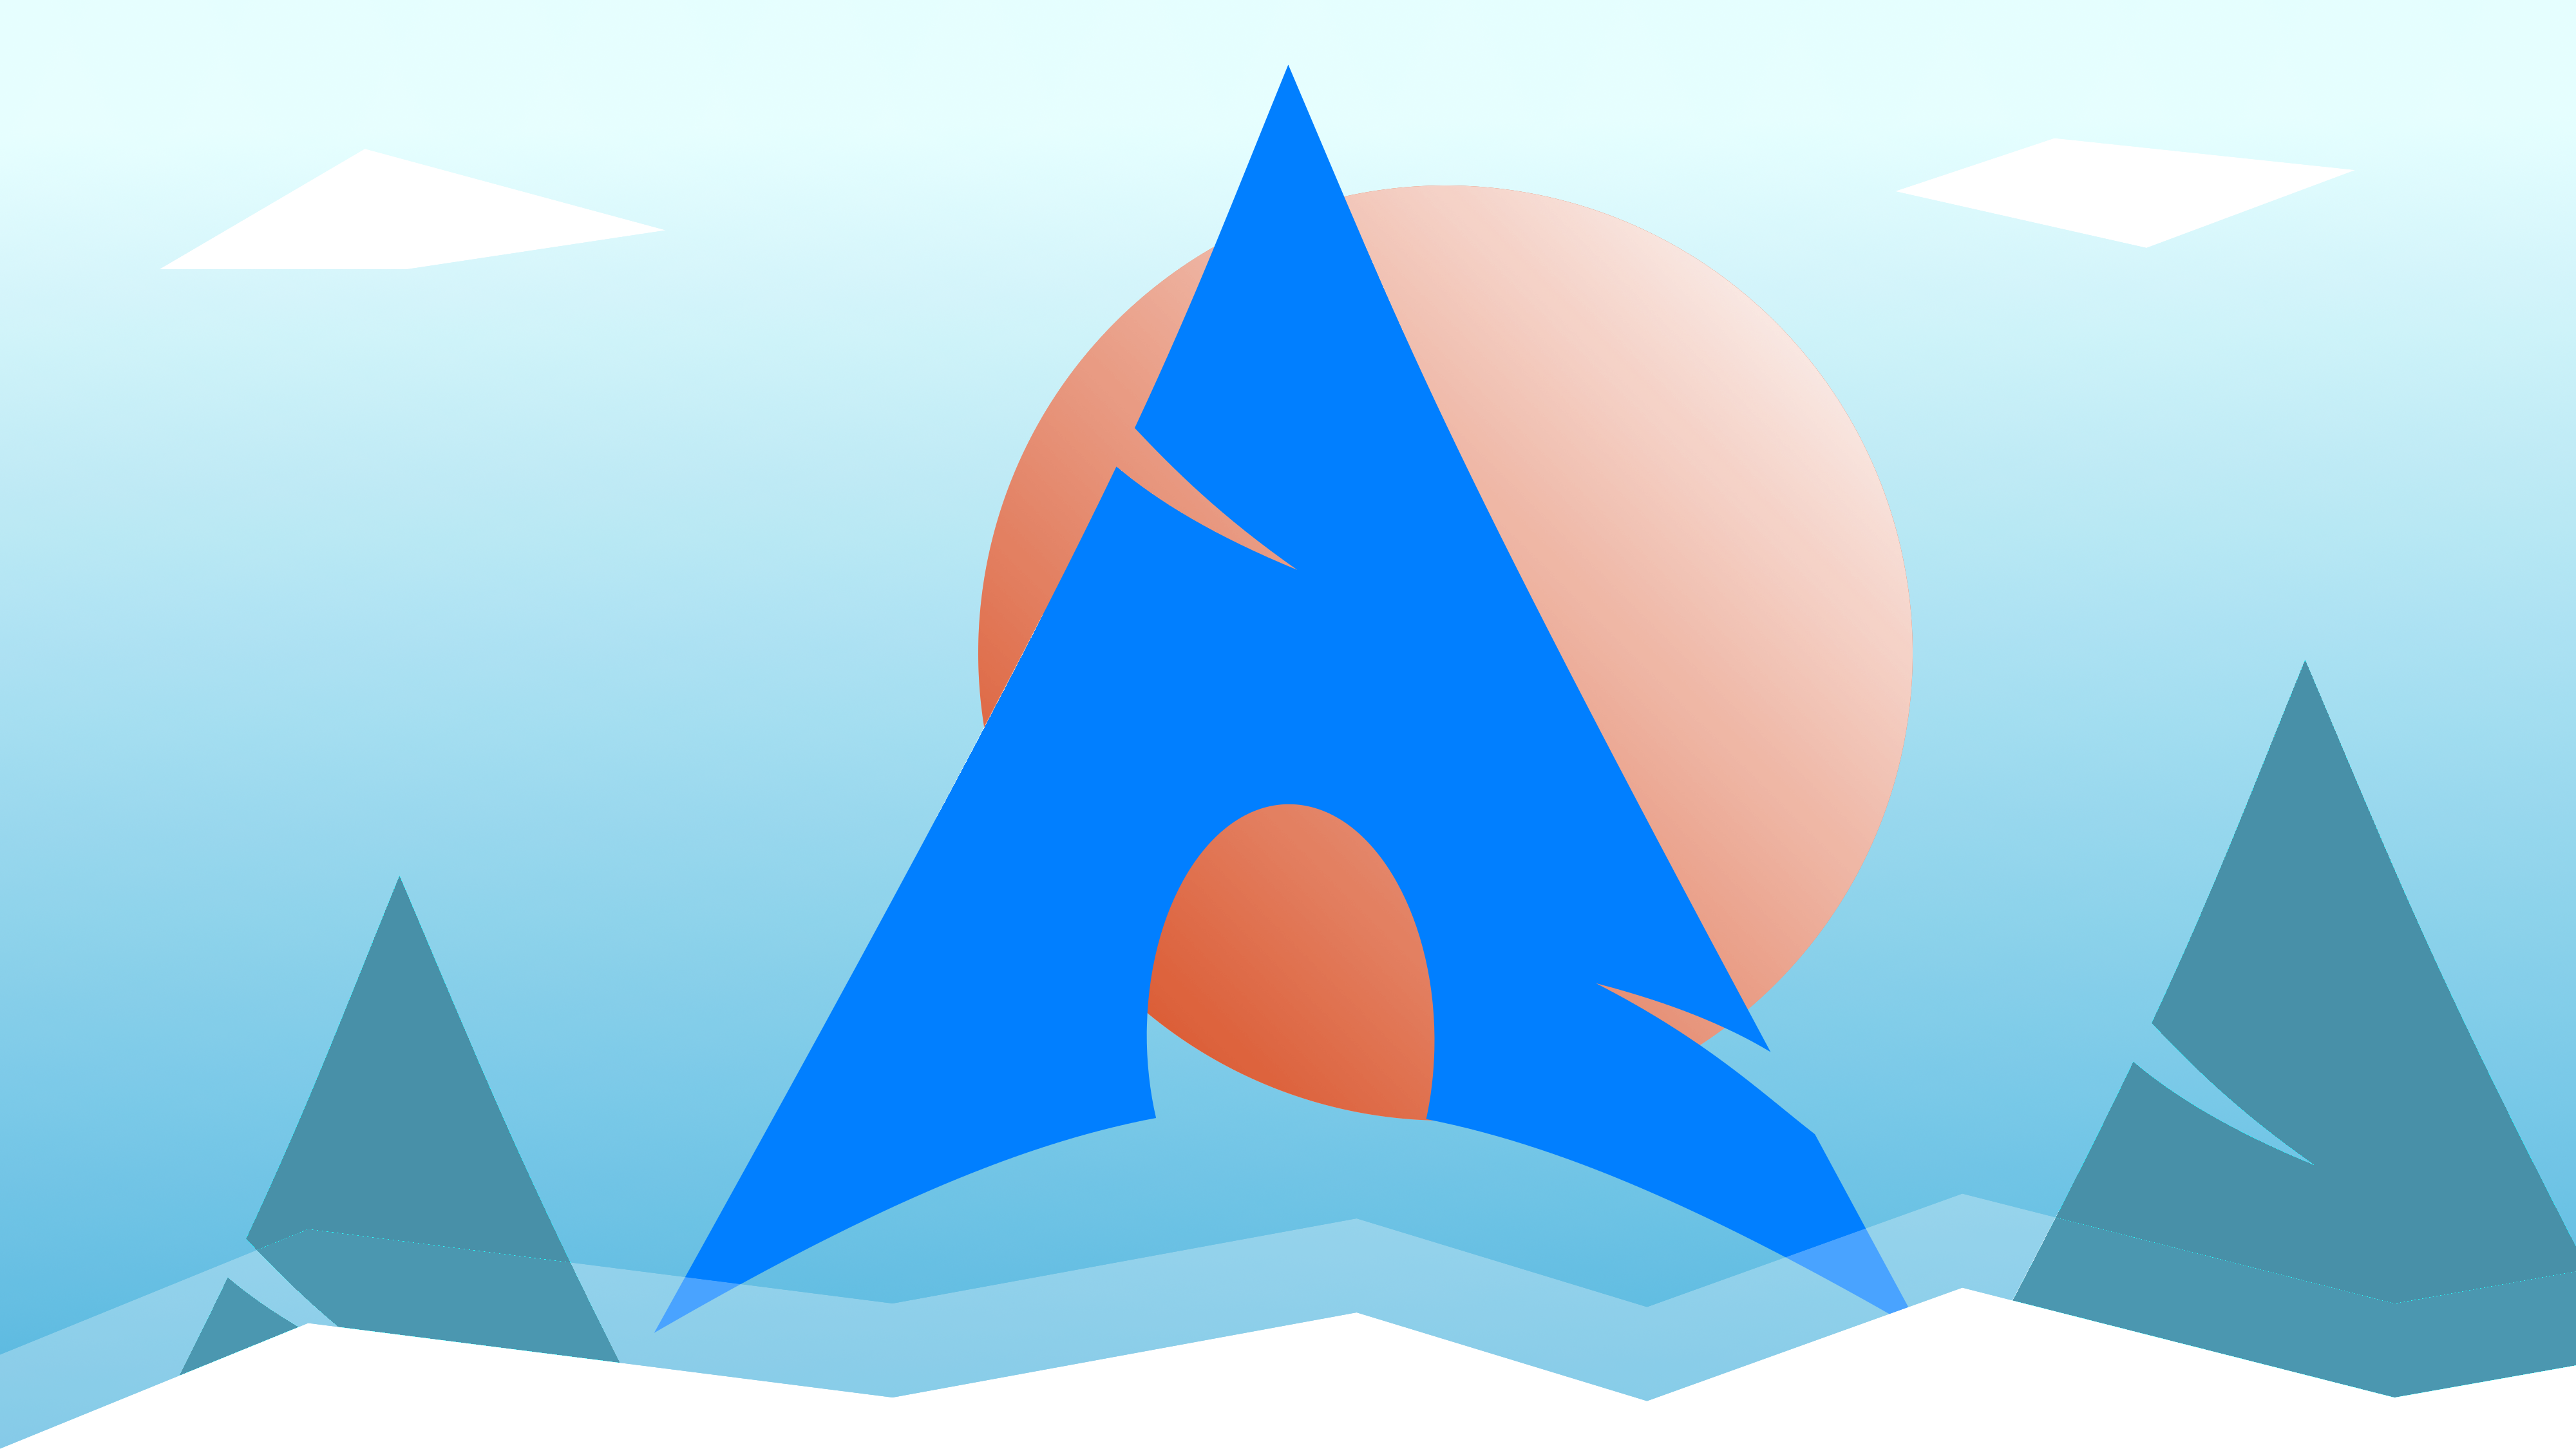 General 4000x2250 Linux Arch Linux logo operating system blue digital art